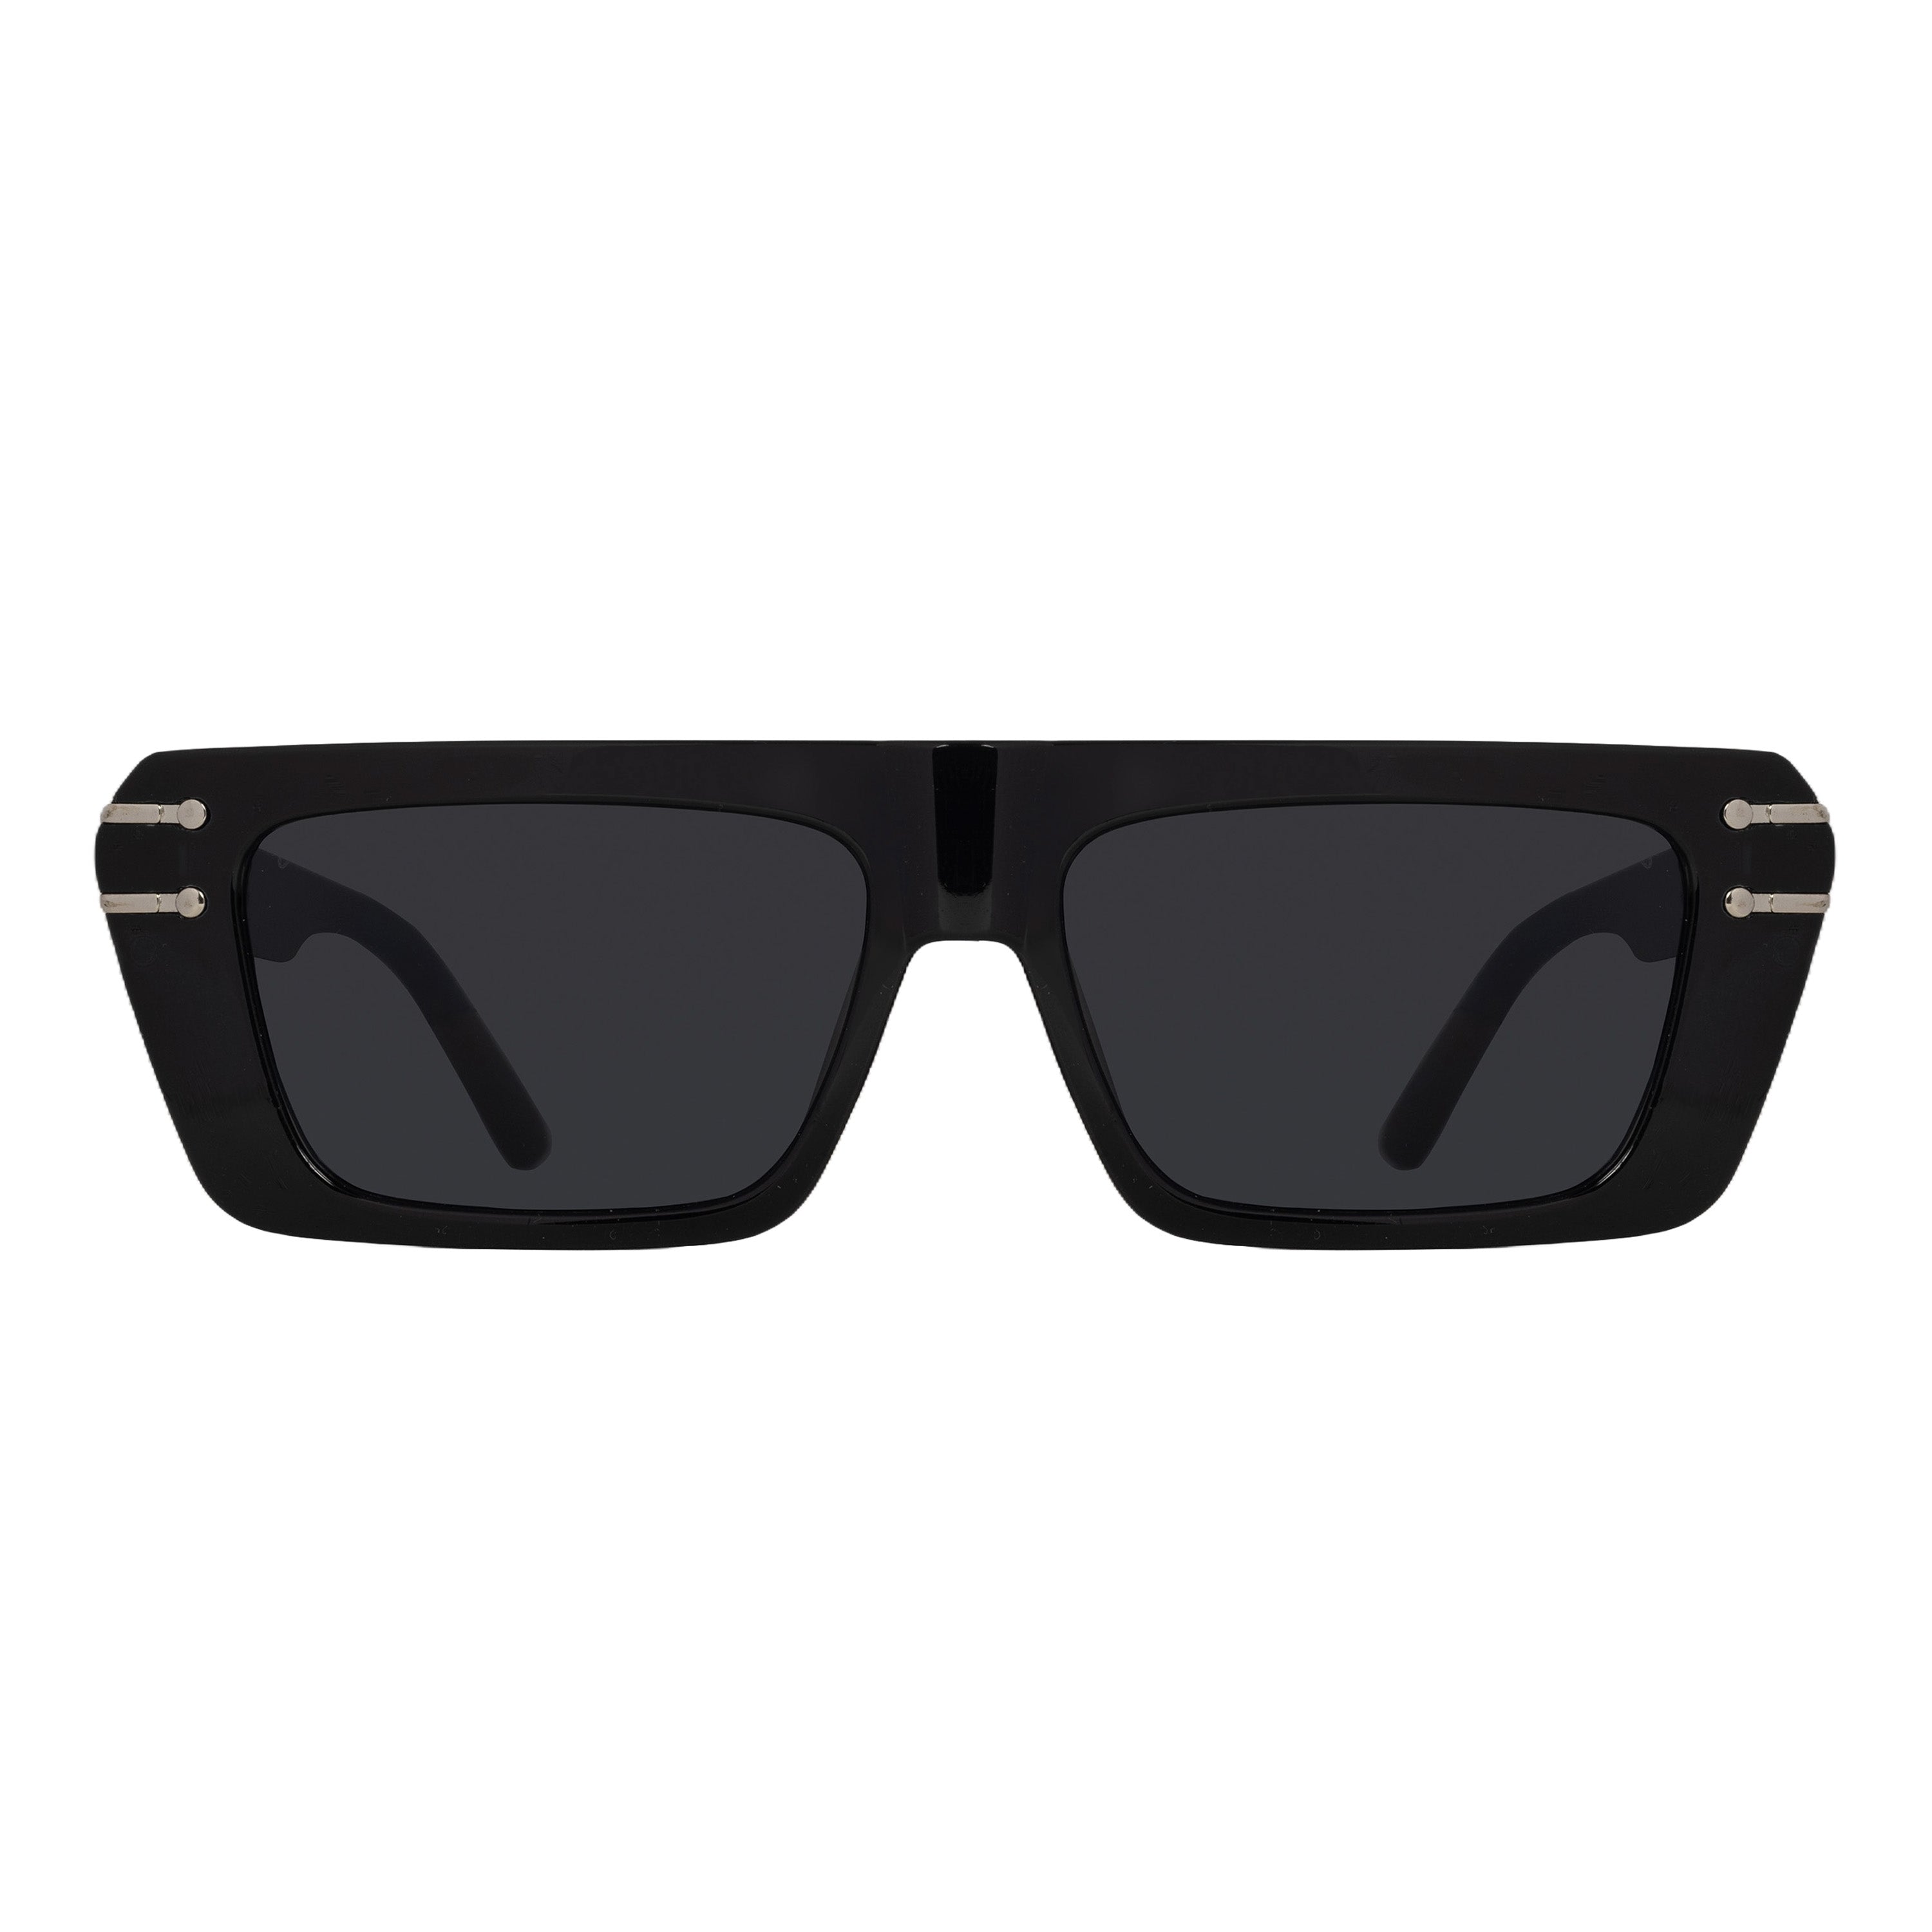 Montreal Sunglasses (UV 400 Protection)